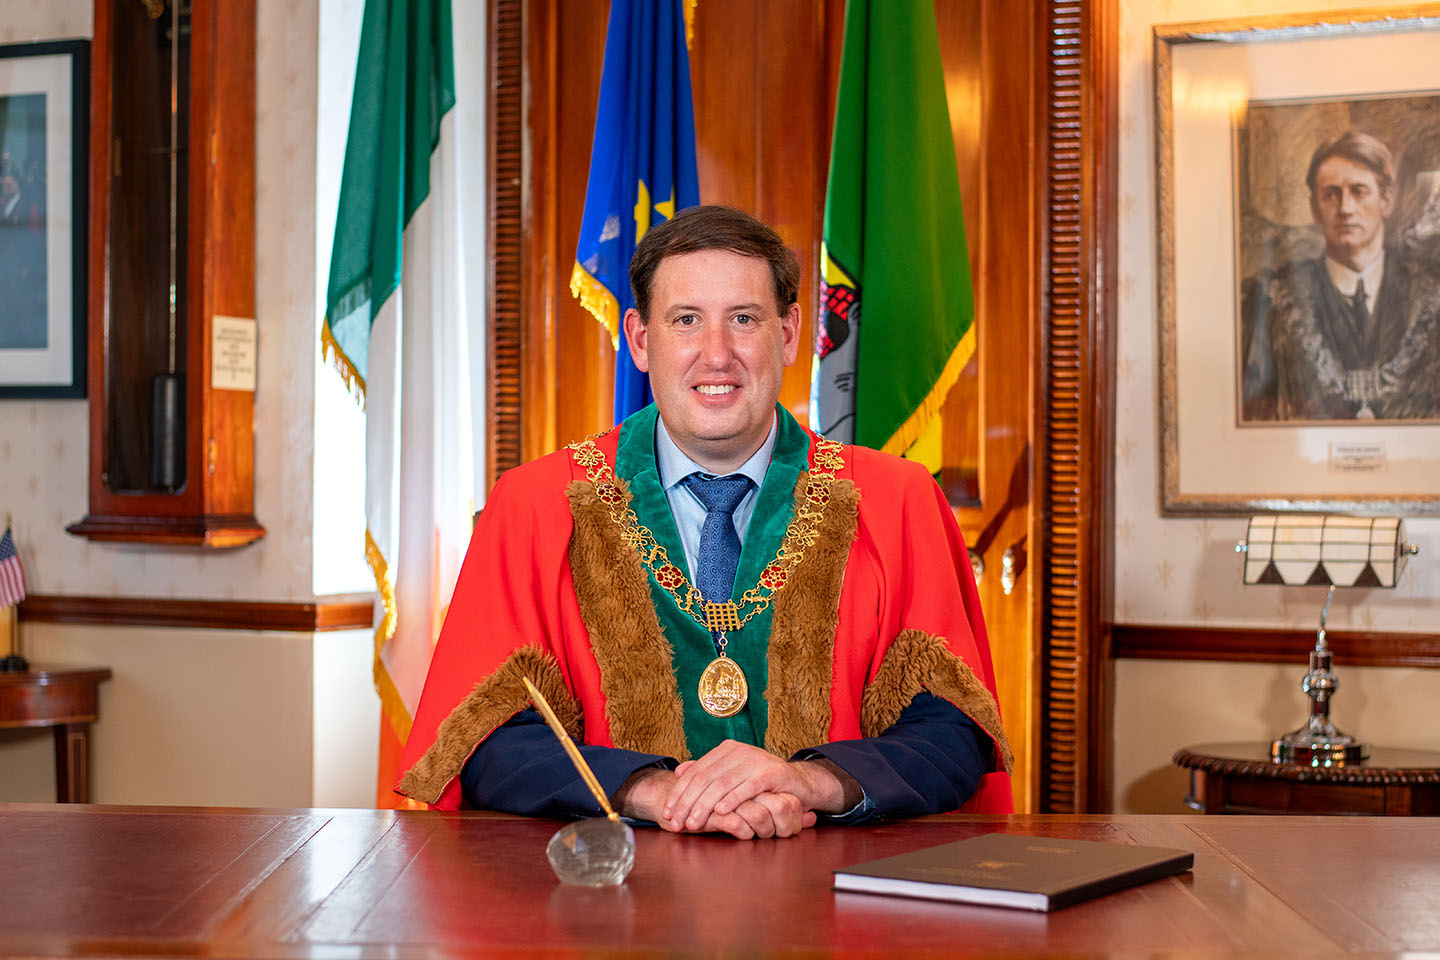 Photo of the Lord Mayor of Cork Kieran McCarthy